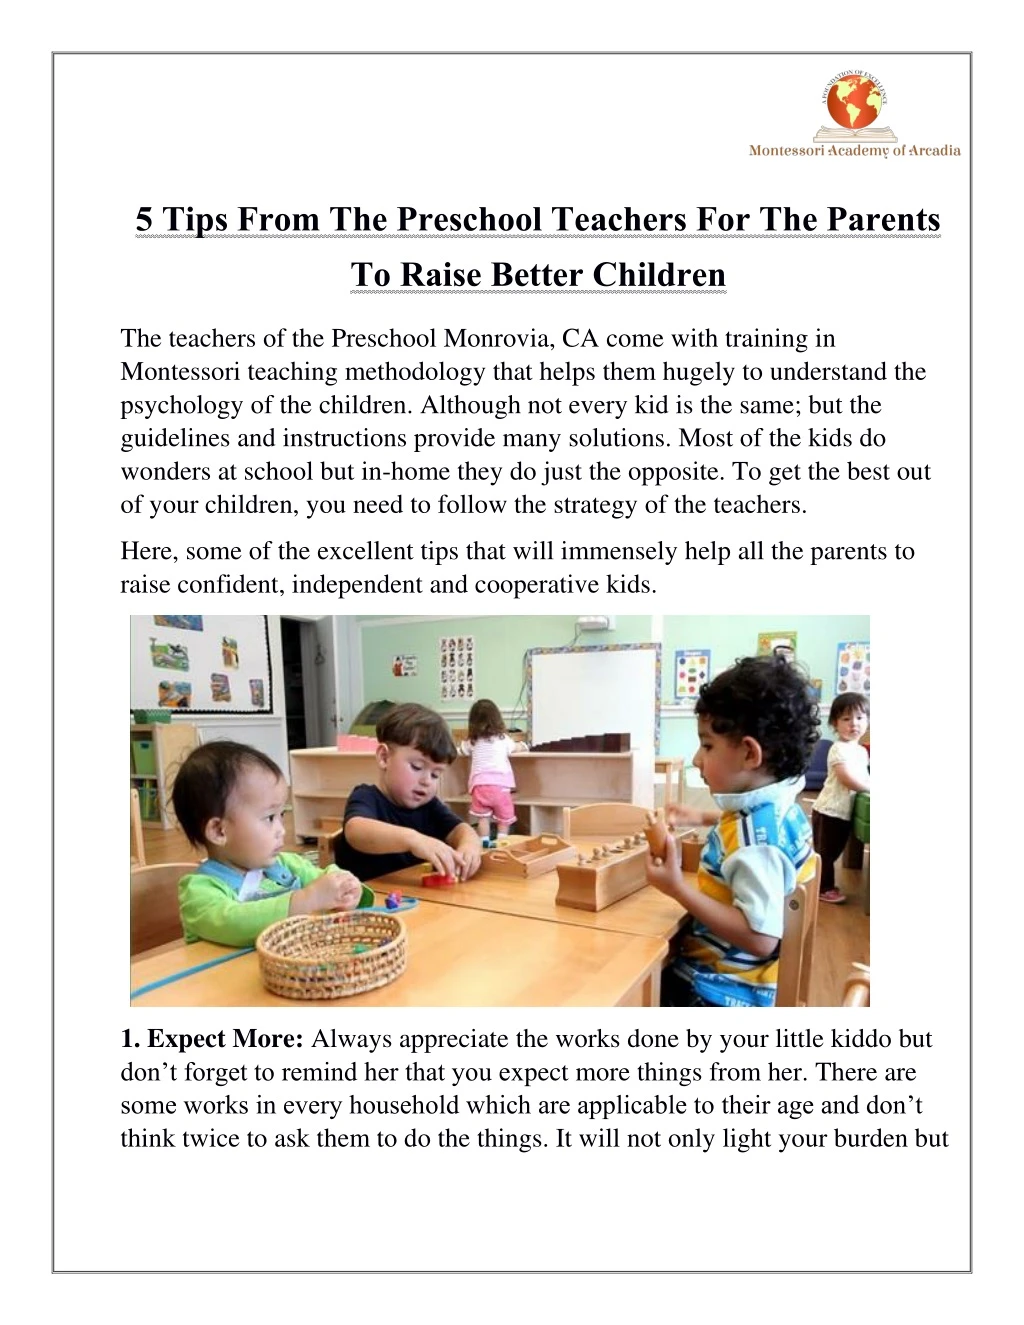 5 tips from the preschool teachers